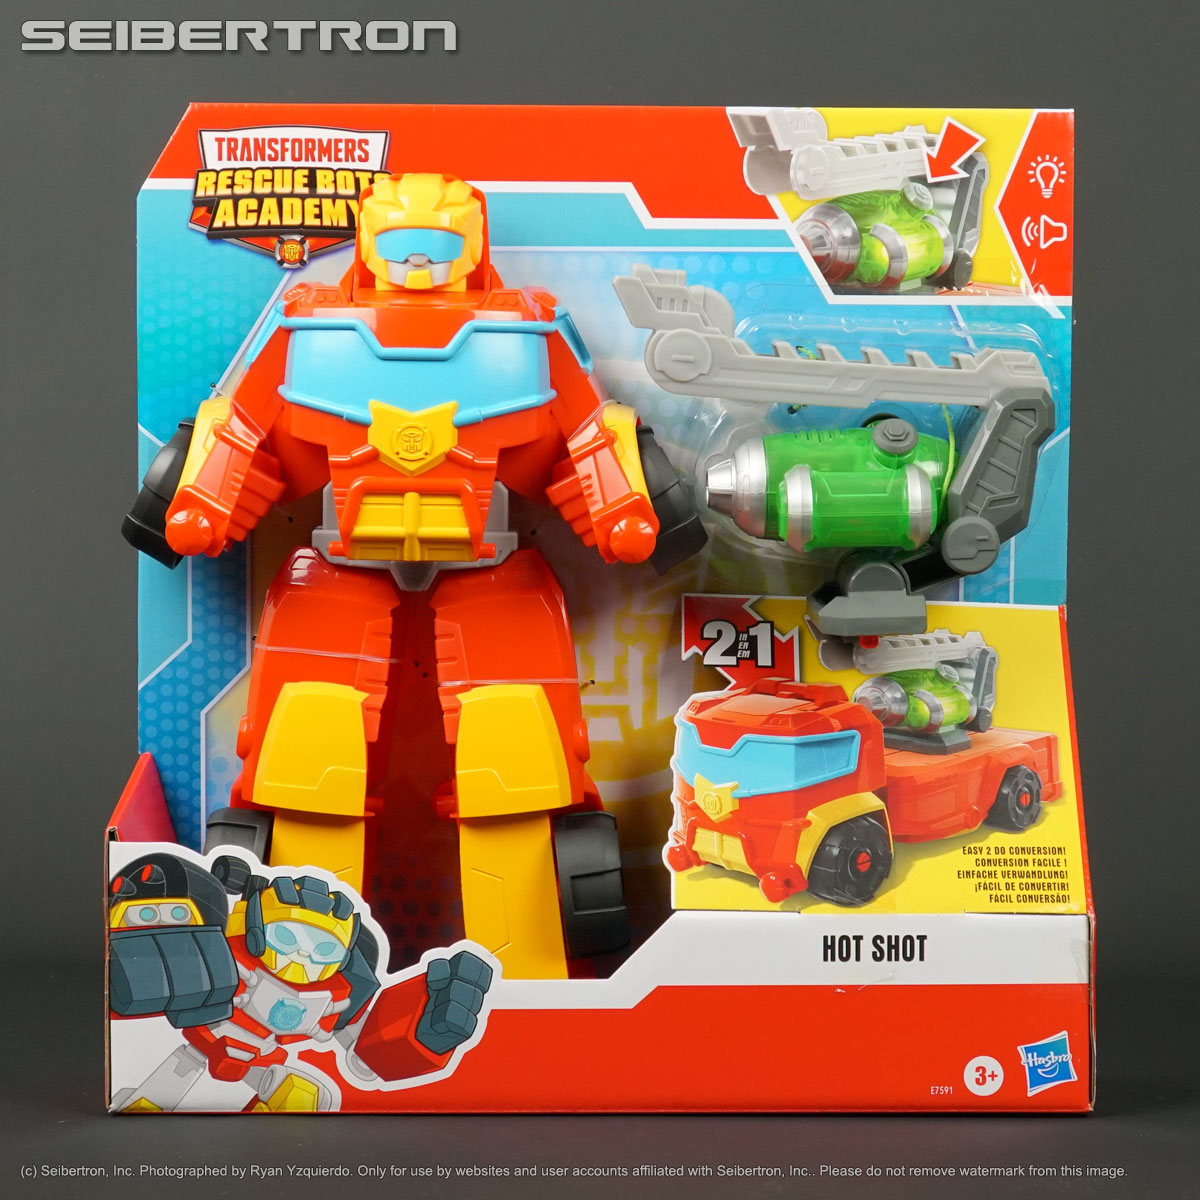 POWER HOT SHOT 14" tall Transformers Rescue Bots Academy Playskool 2020 New